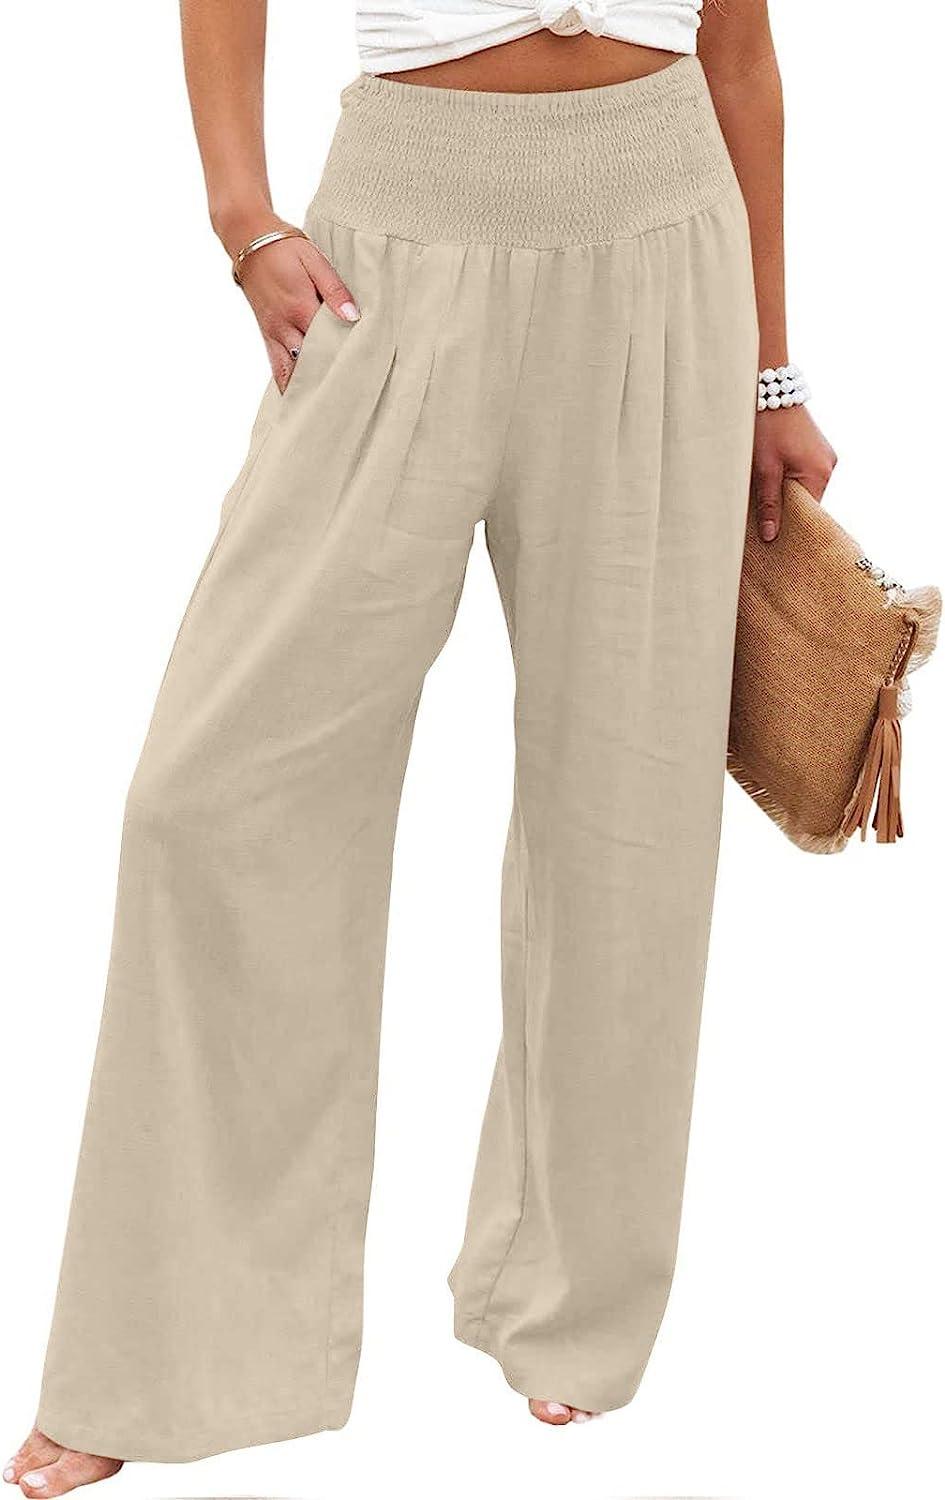 Adjustable Waist Pantshigh Waist Wide Leg Pants For Women - Adjustable Spandex  Trousers